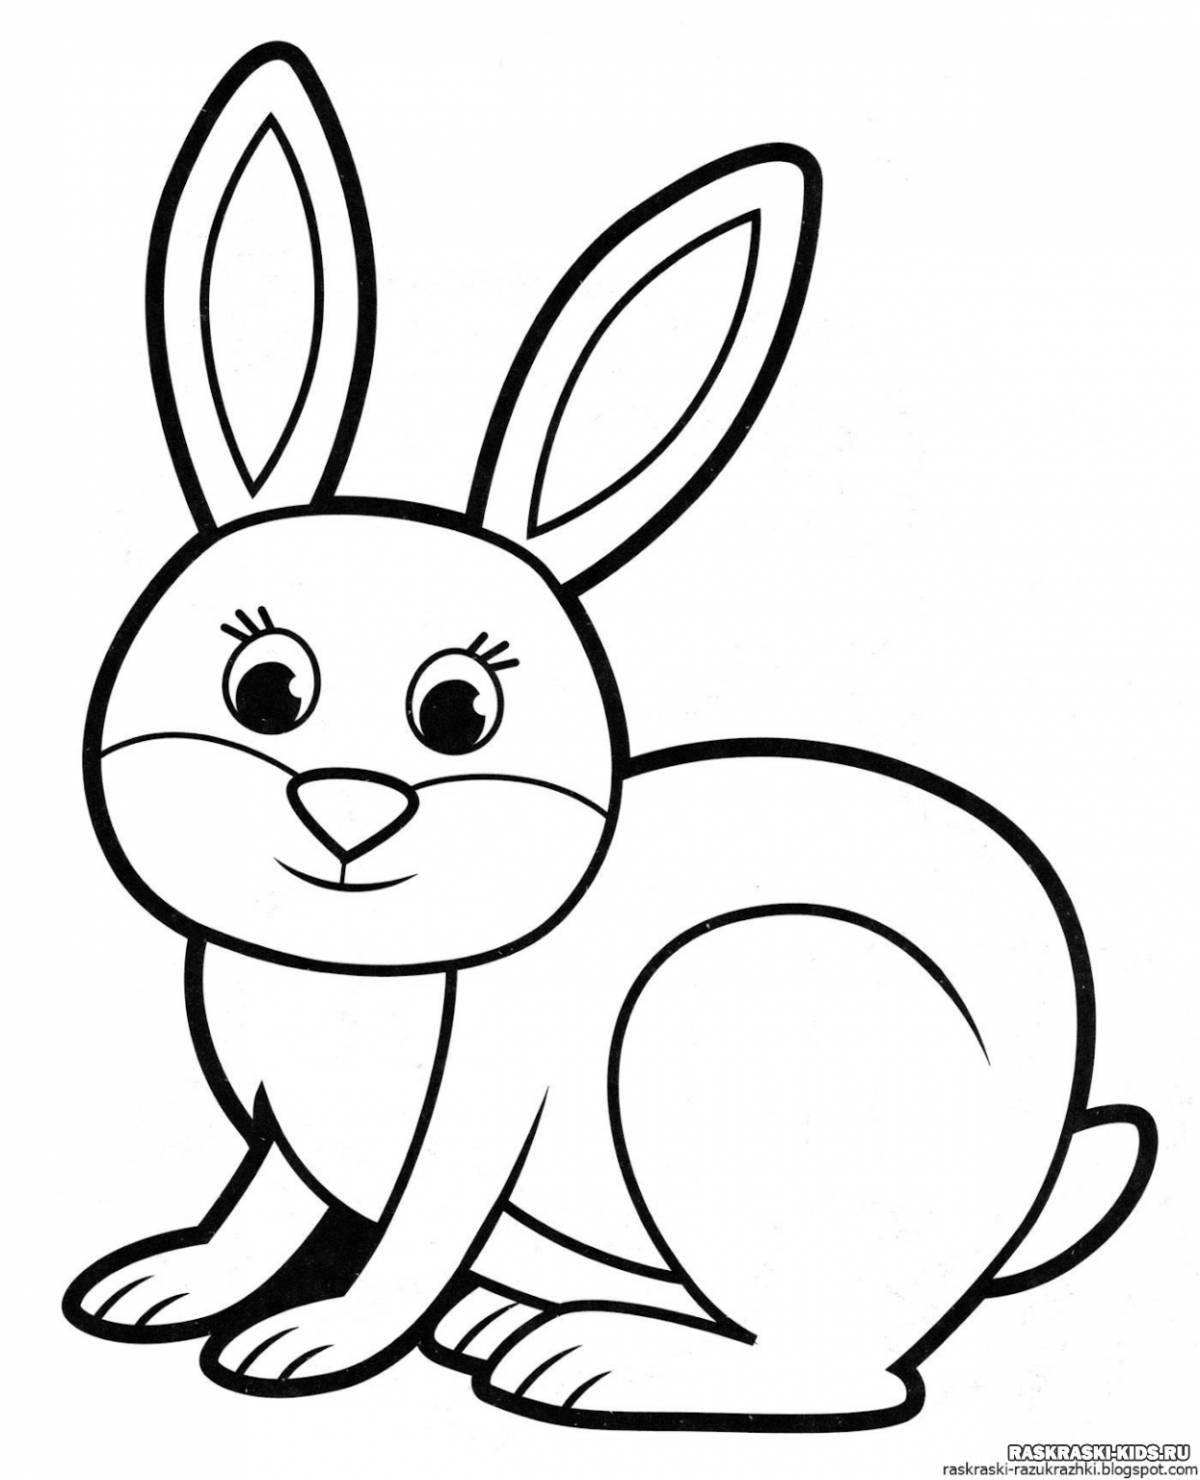 Adorable coloring bunny drawing